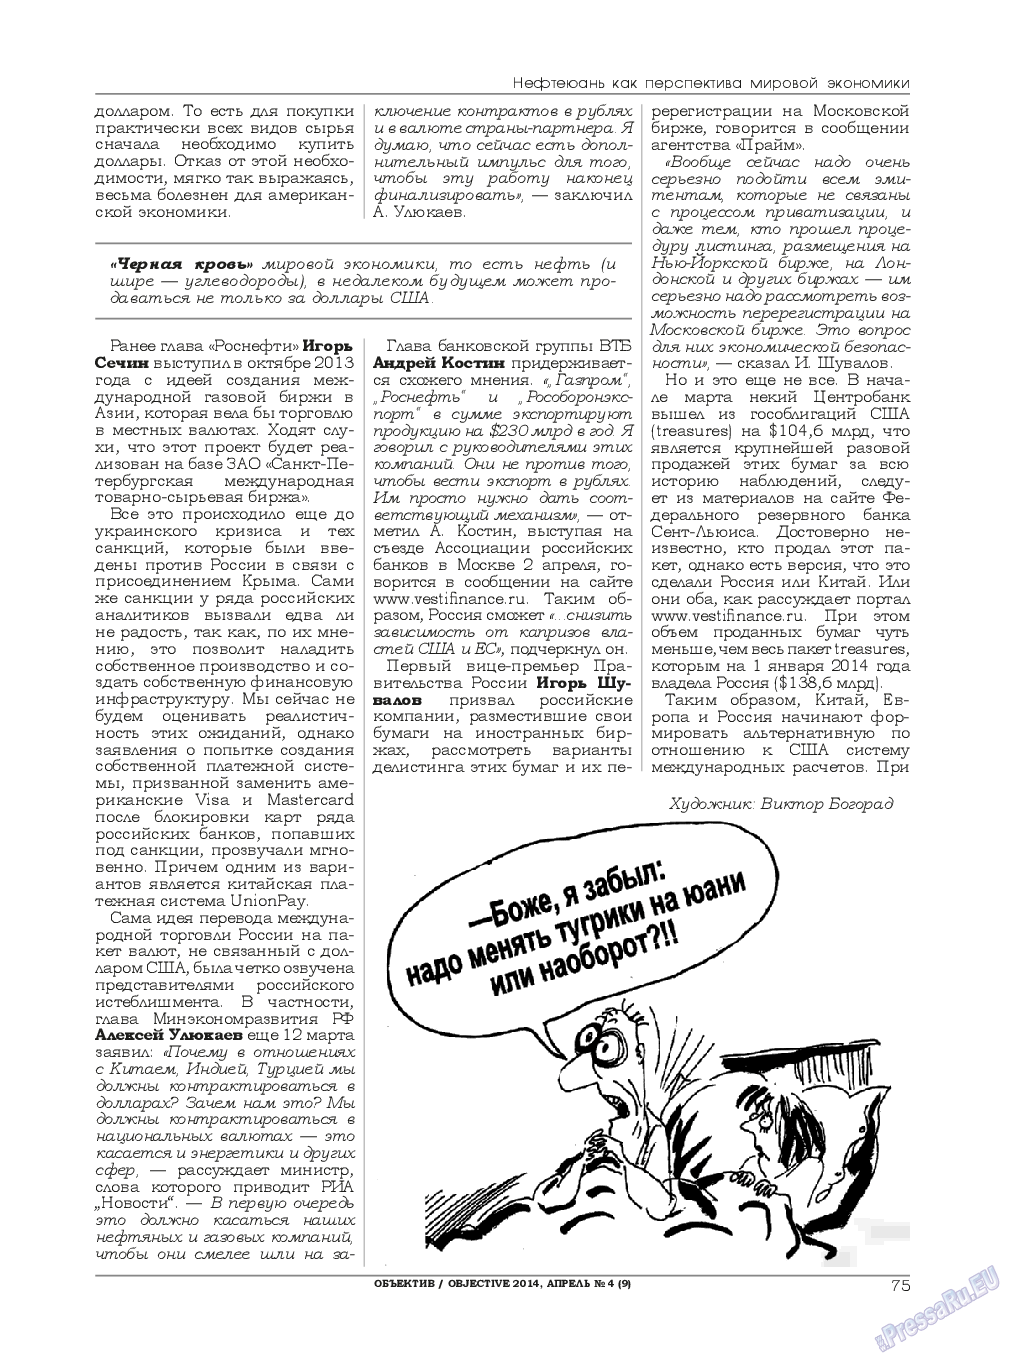 Объектив EU, журнал. 2014 №4 стр.75